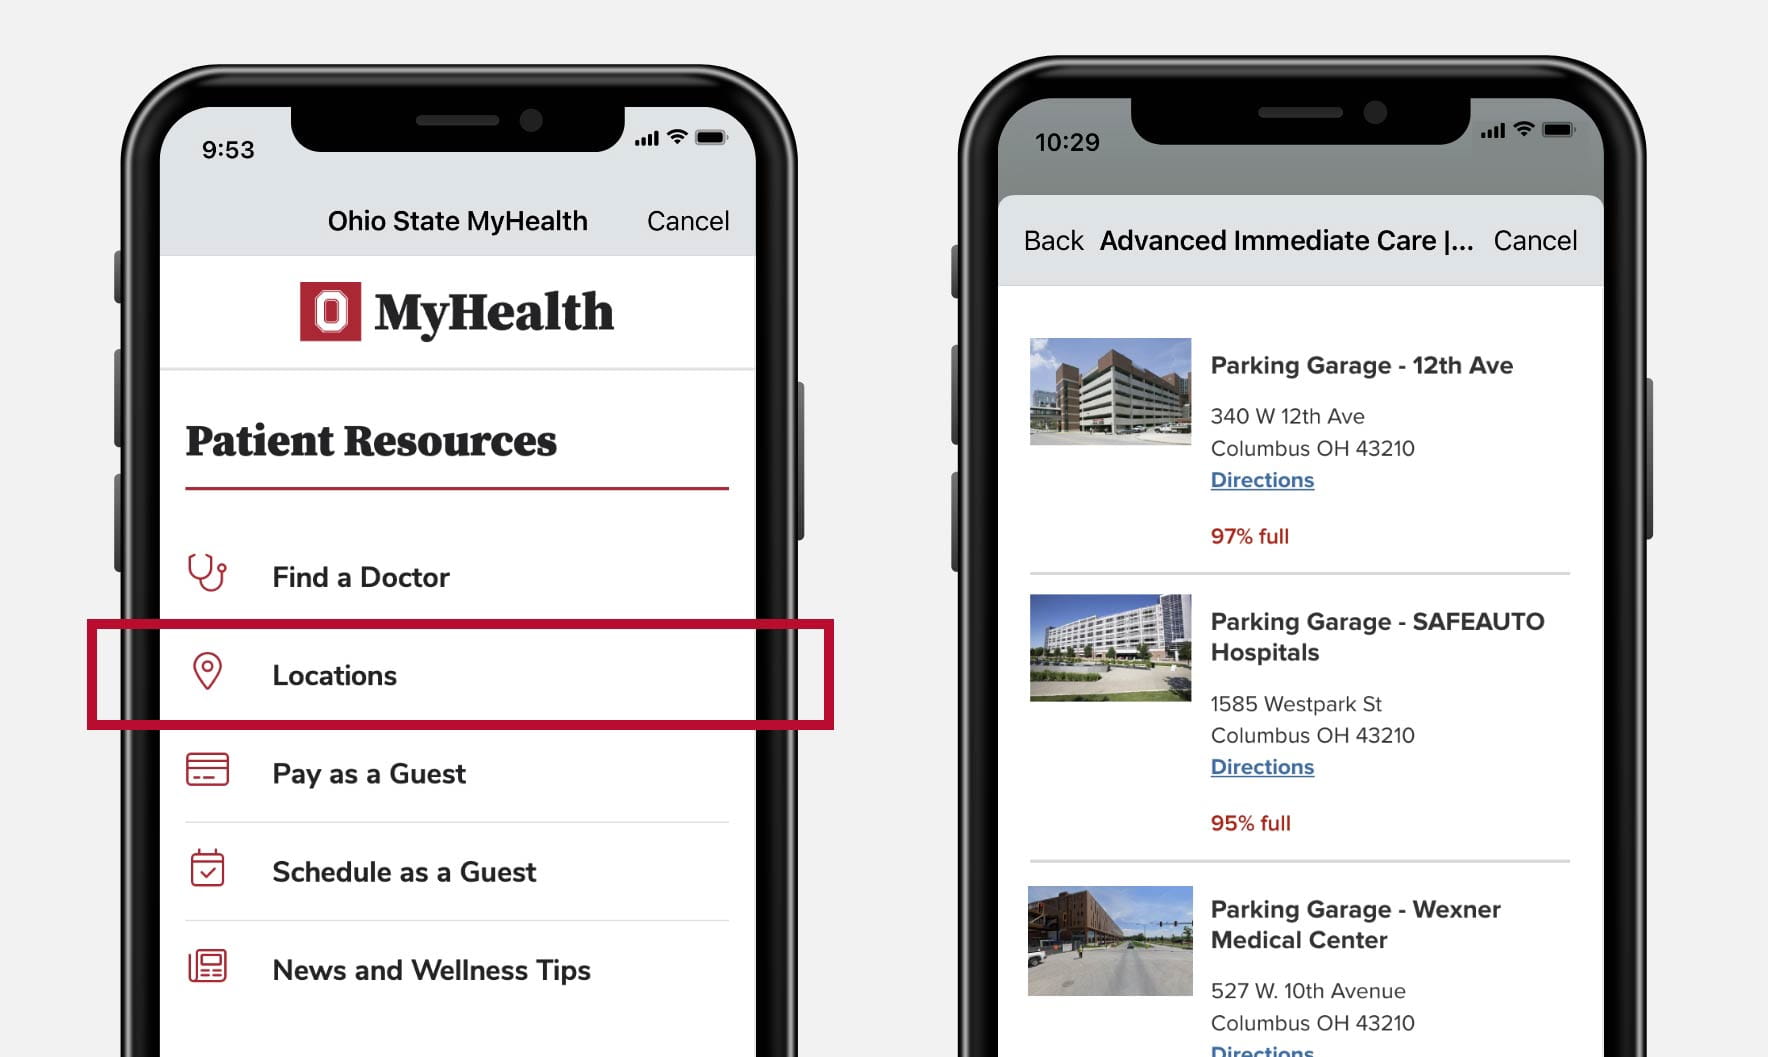 Screenshots of parking garage information in the MyHealth app